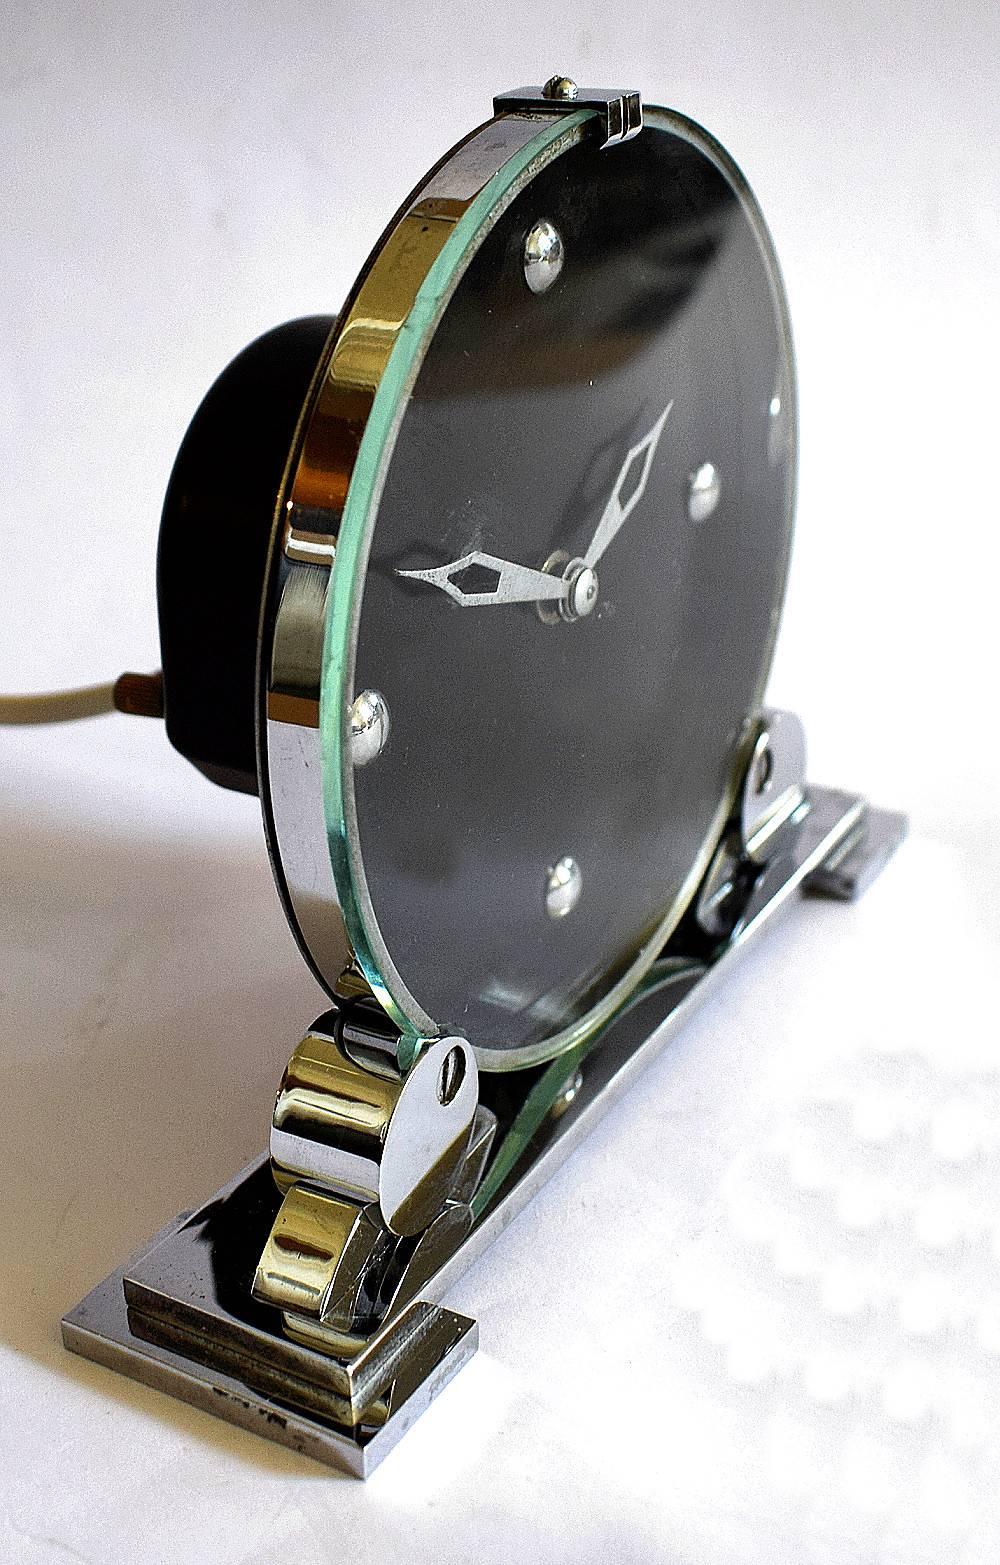 Great Britain (UK) Modernist English Art Deco Chrome Clock